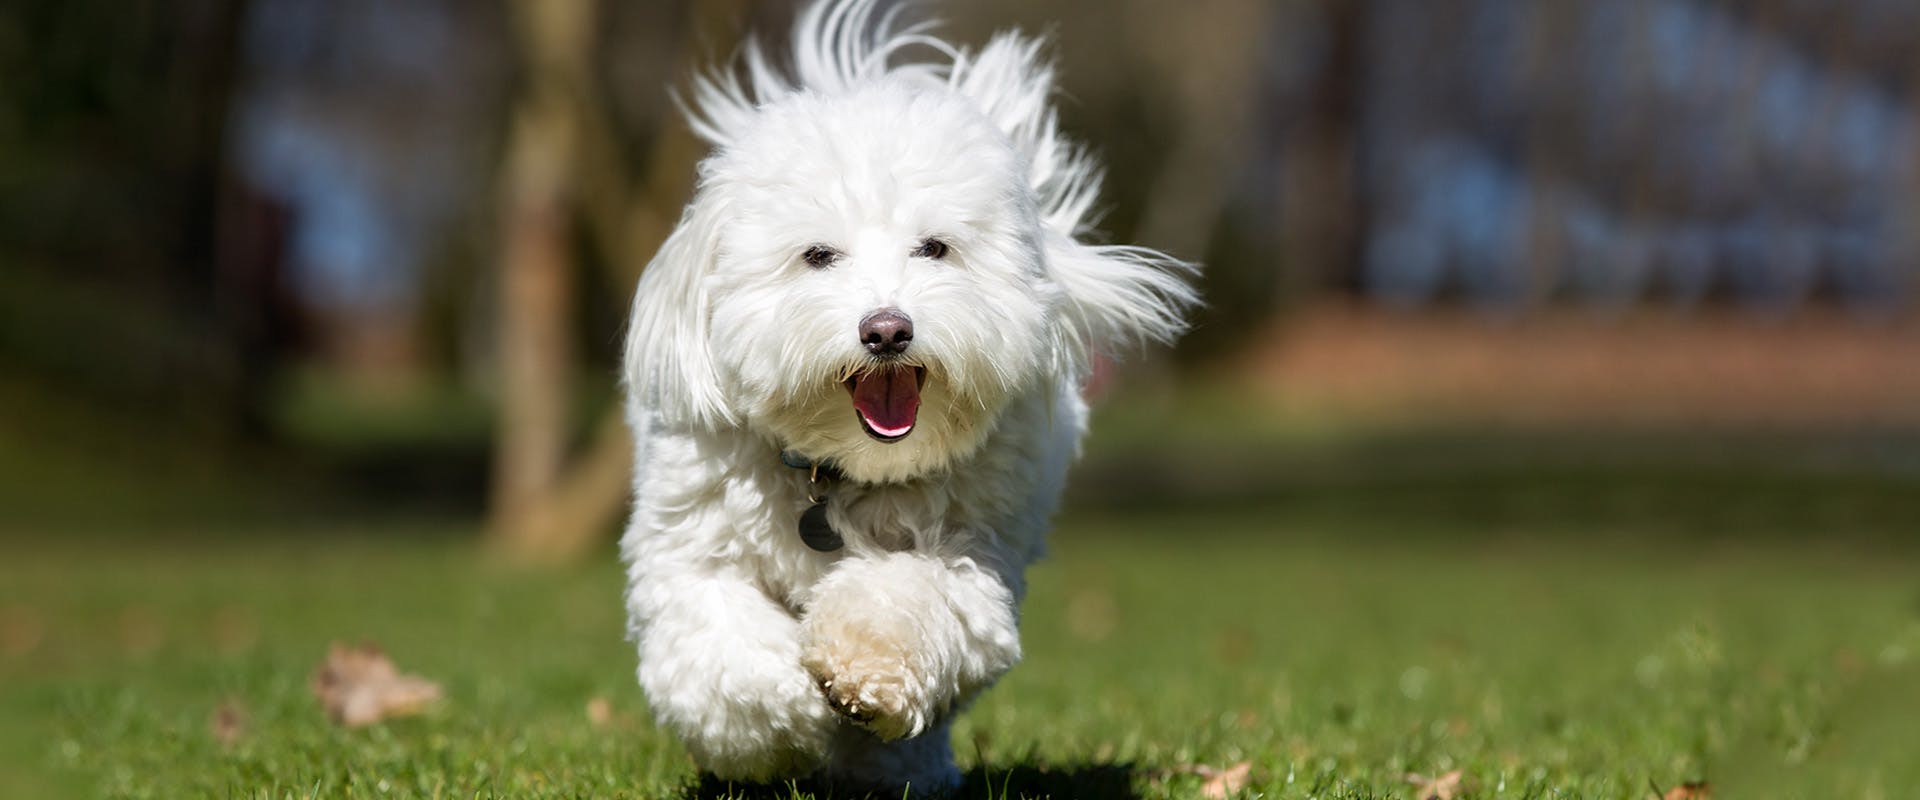 A cute Coton de Tulear dog running through a field of grass, the wind blowing its fur up